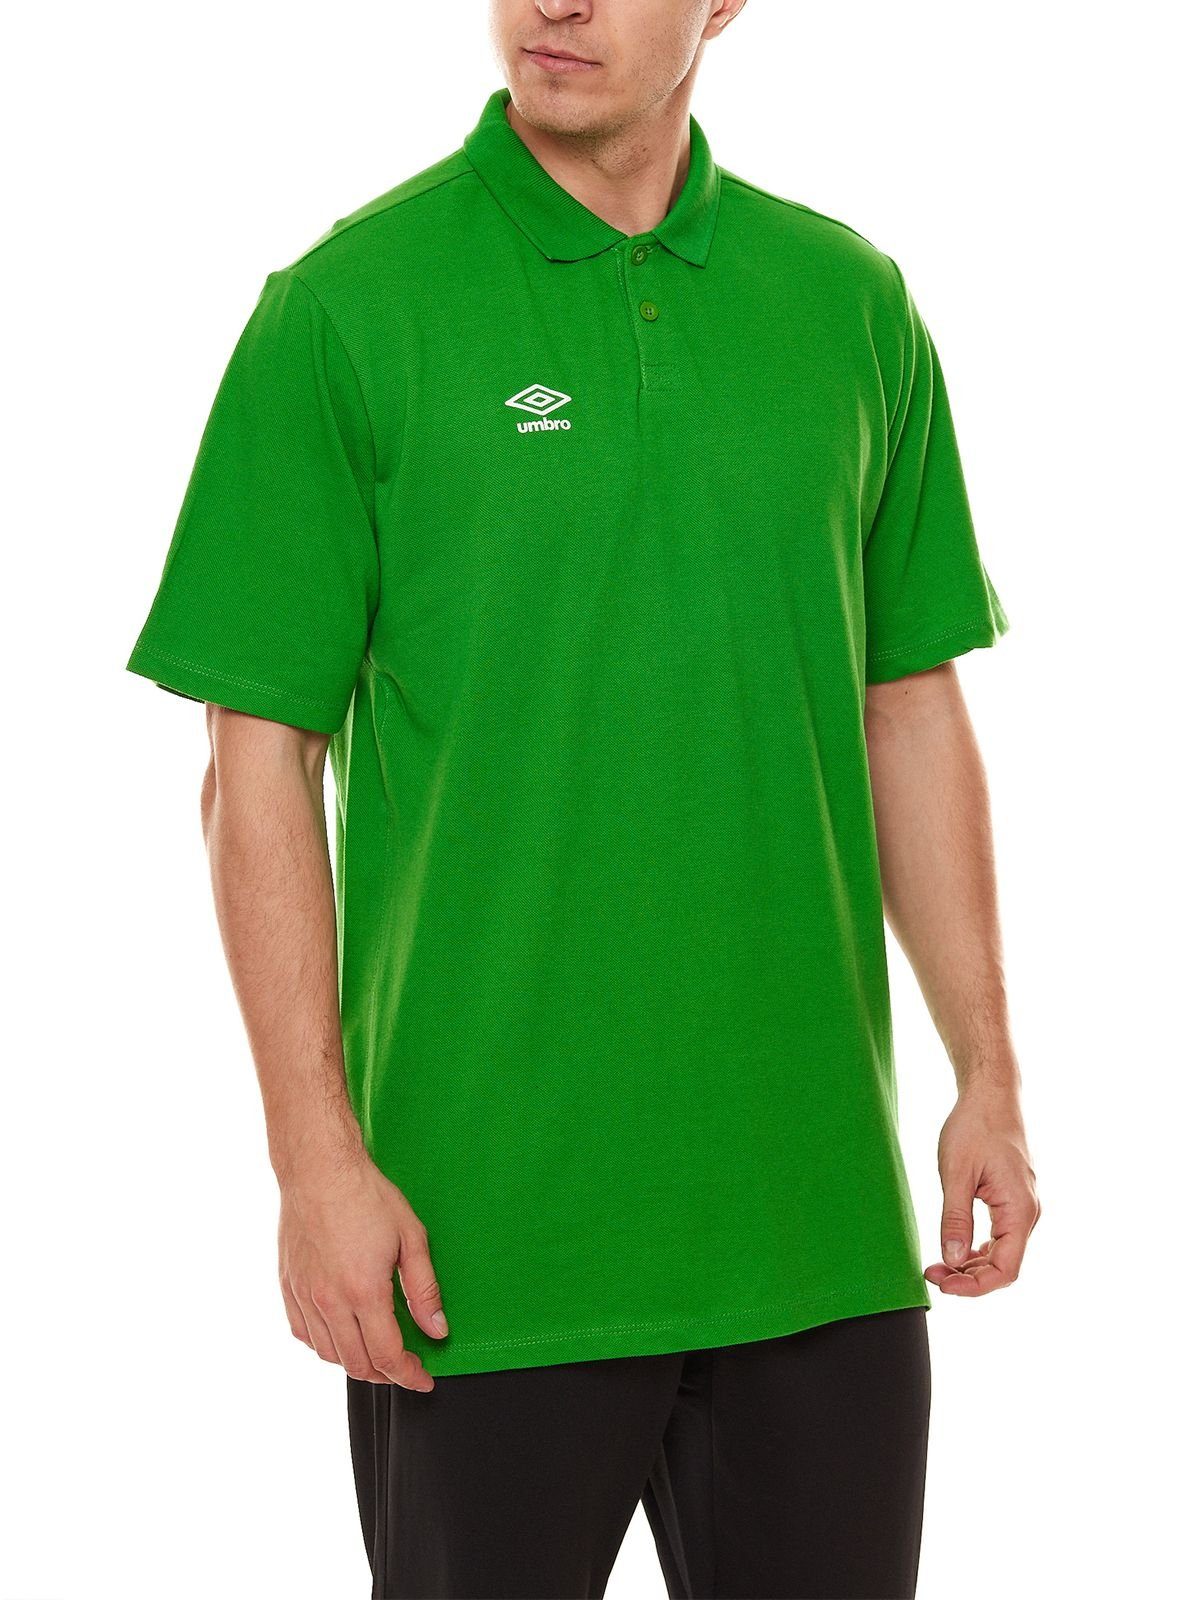 Polohemd Polo-Shirt Club Rundhalsshirt Grün Herren Golf-Shirt UMTM0323-065 Umbro Essential umbro modisches